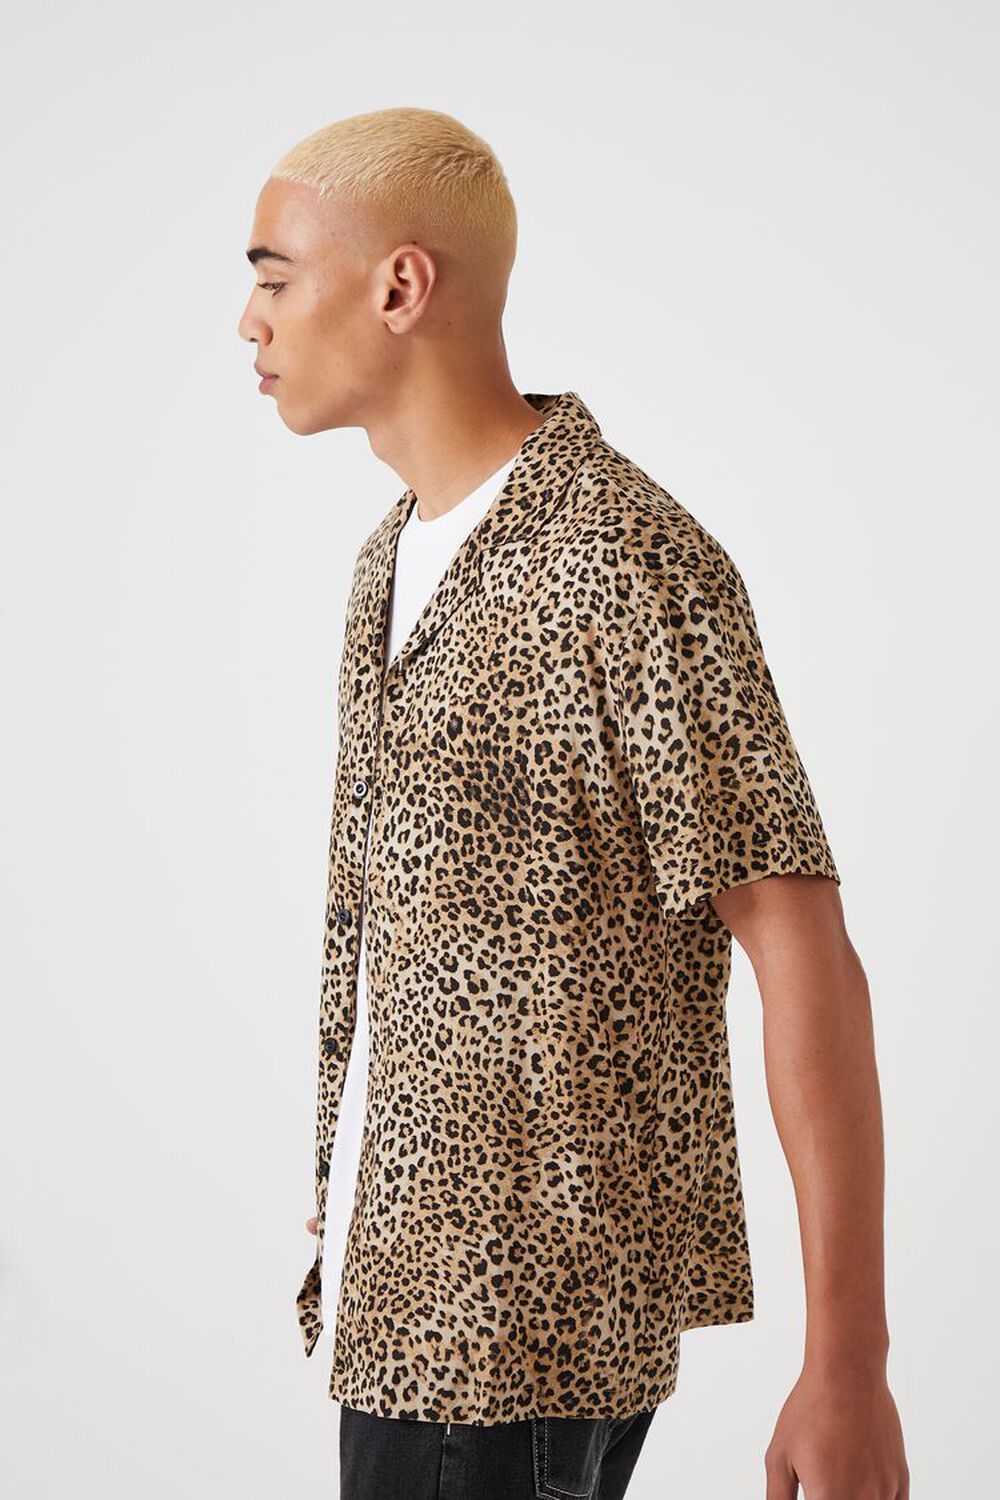 LIGHT BROWN/MULTI Leopard Print Shirt, image 2